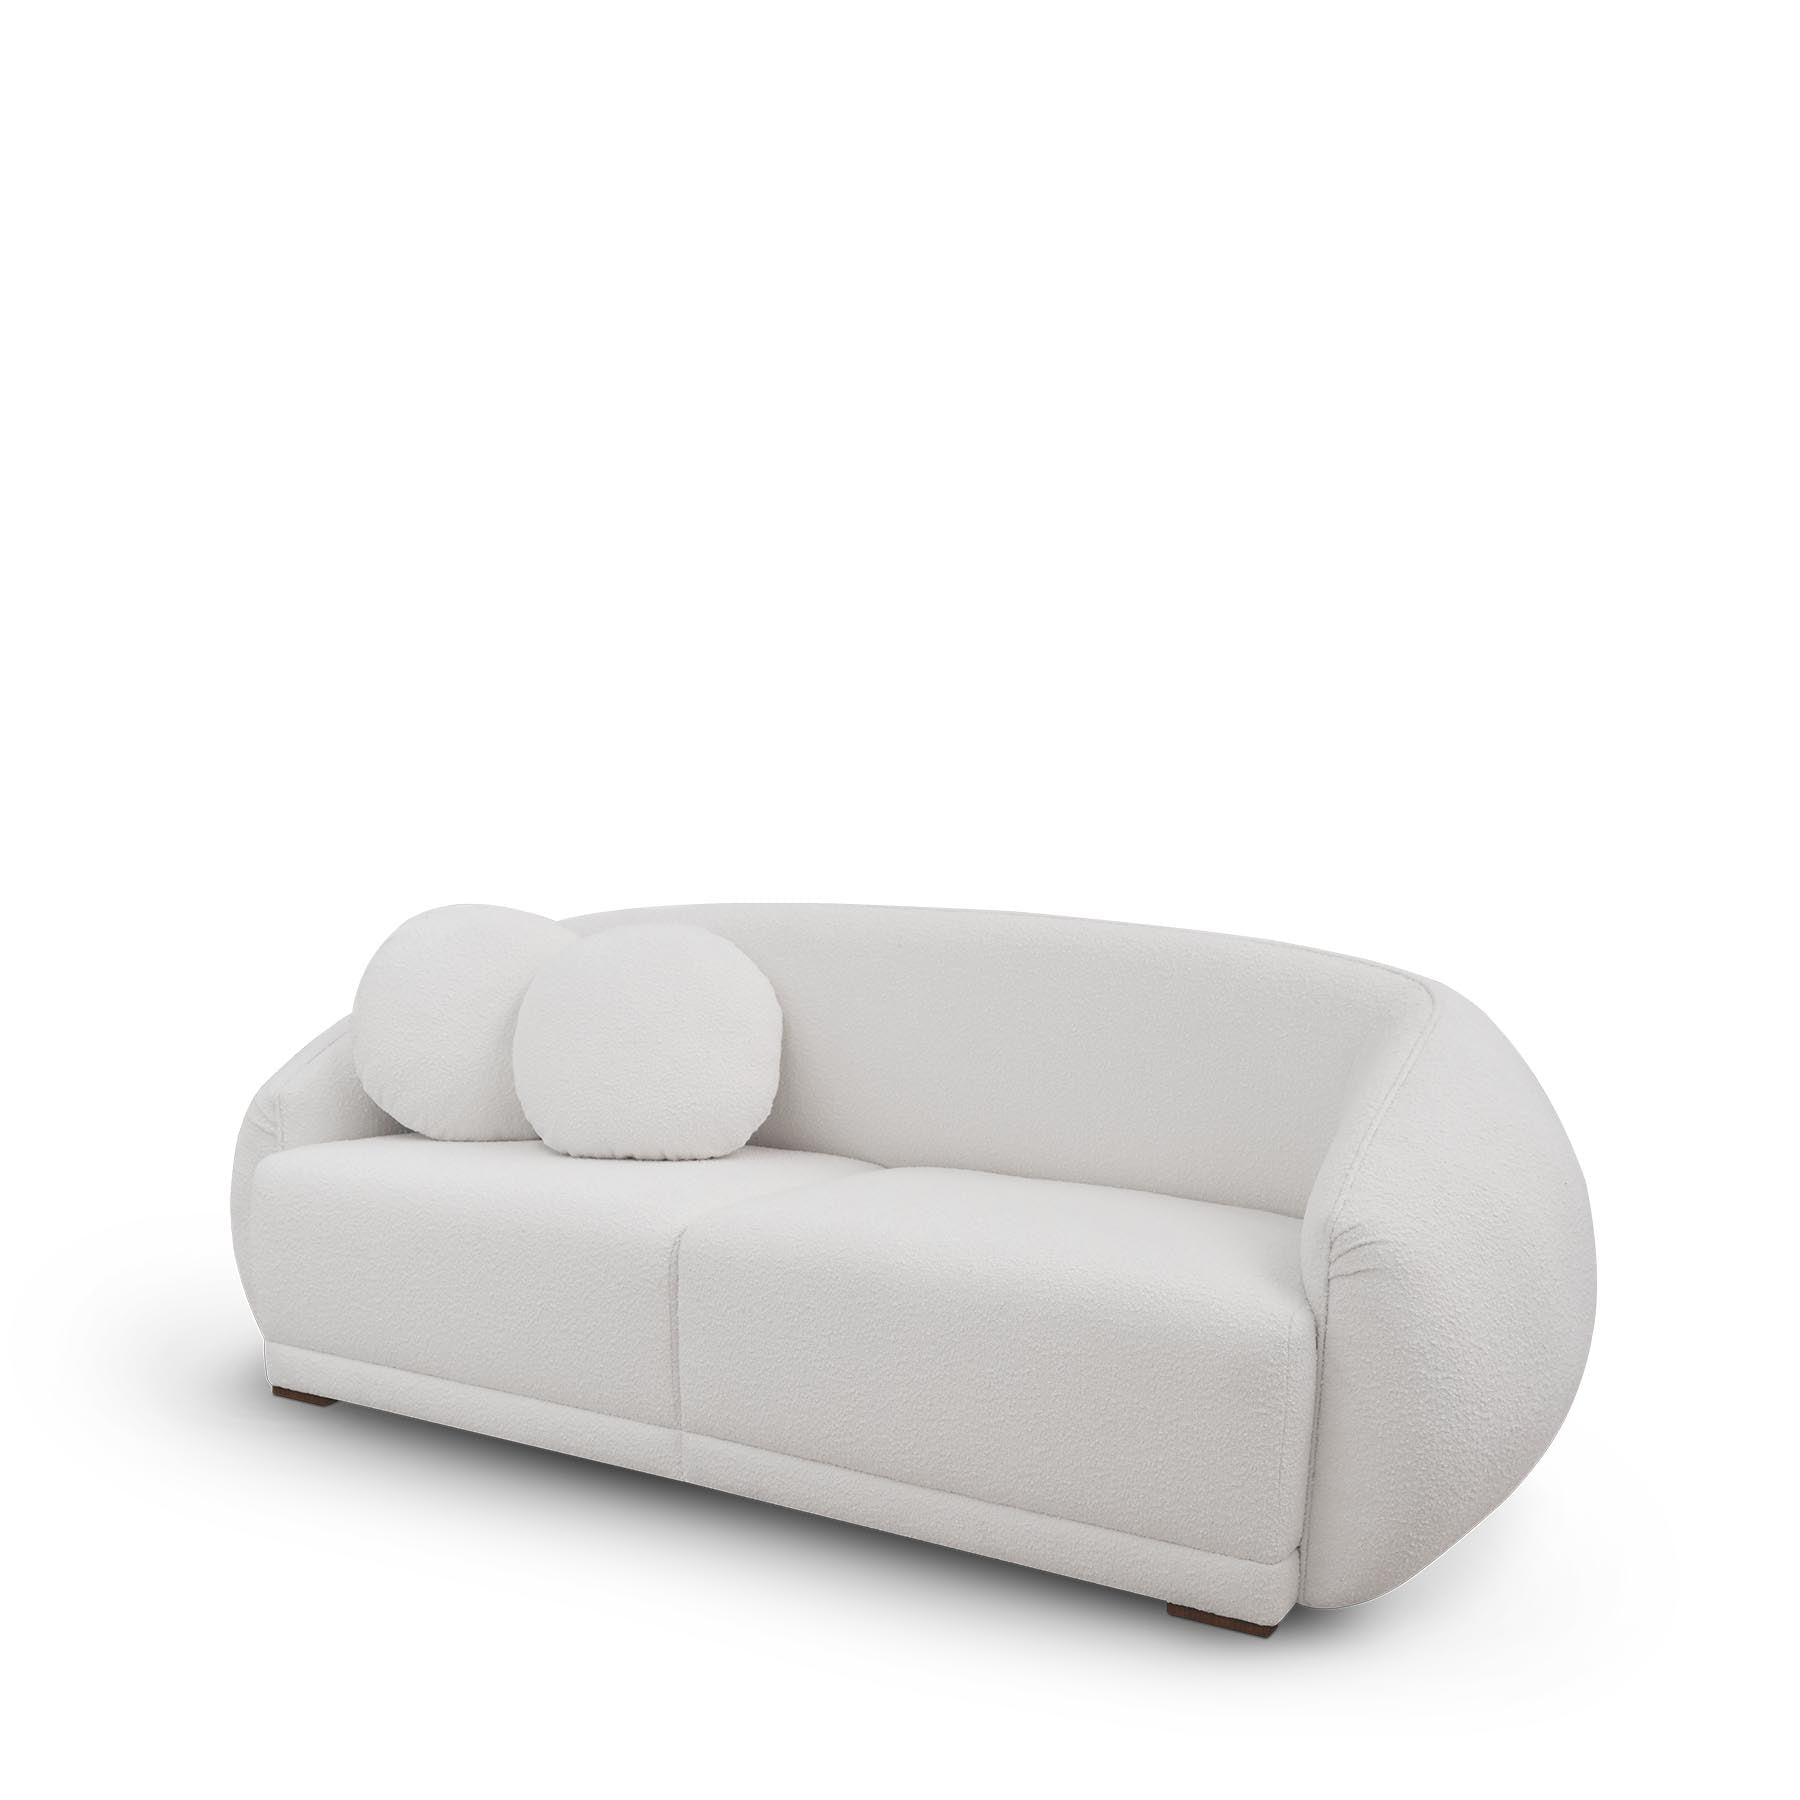 PEGGY - SOFA | Modern Furniture + Decor